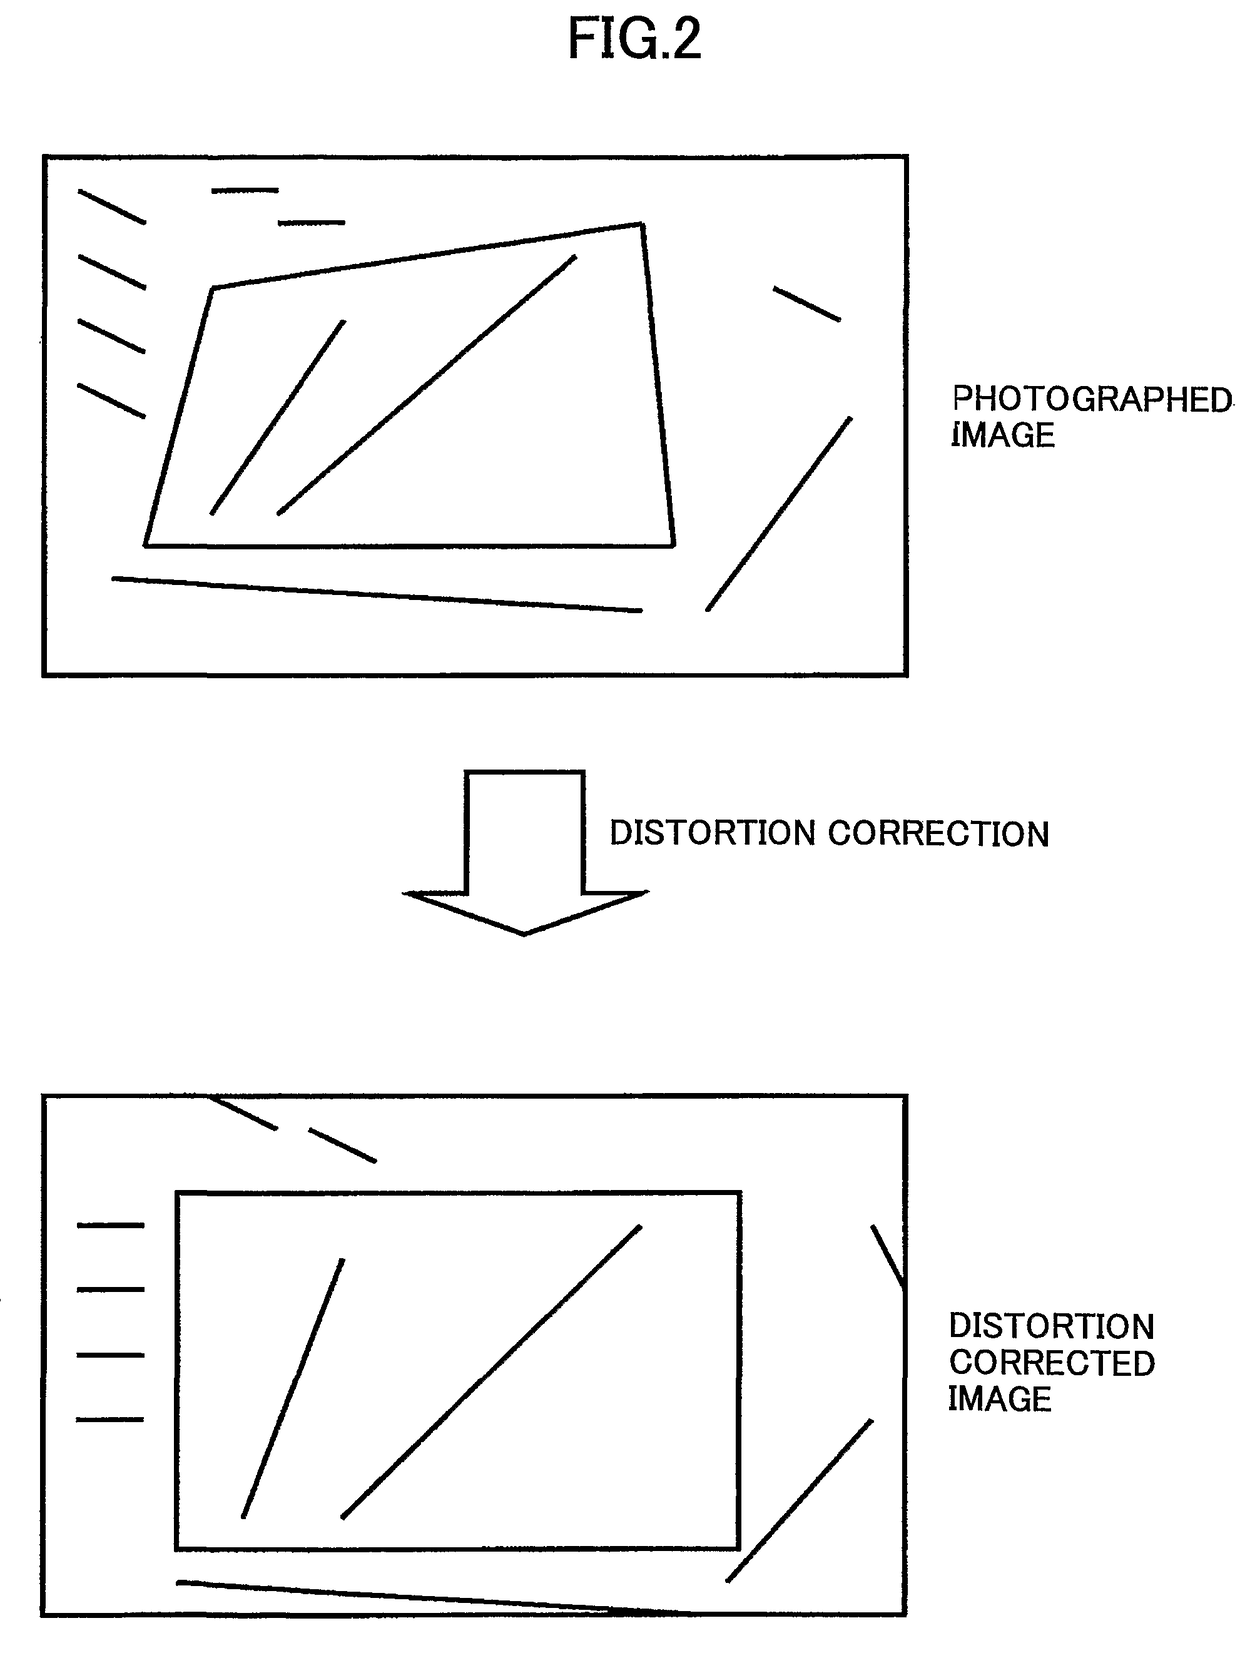 Image processing method and apparatus, digital camera, and recording medium recording image processing program